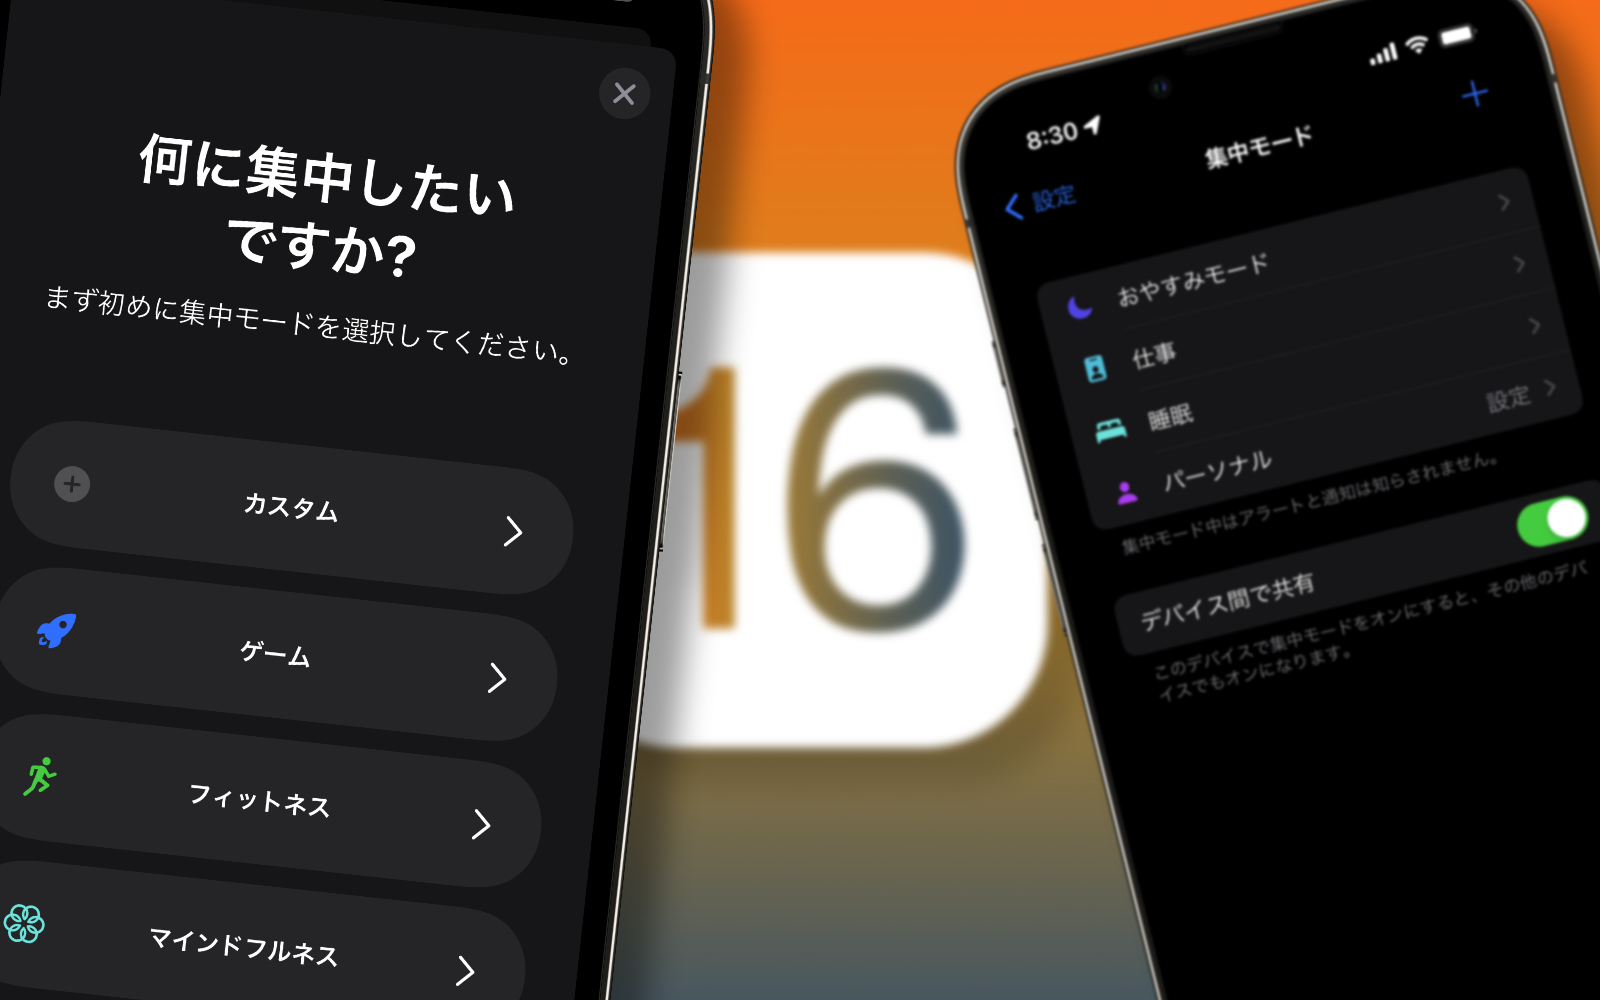 Focus Mode on iOS16